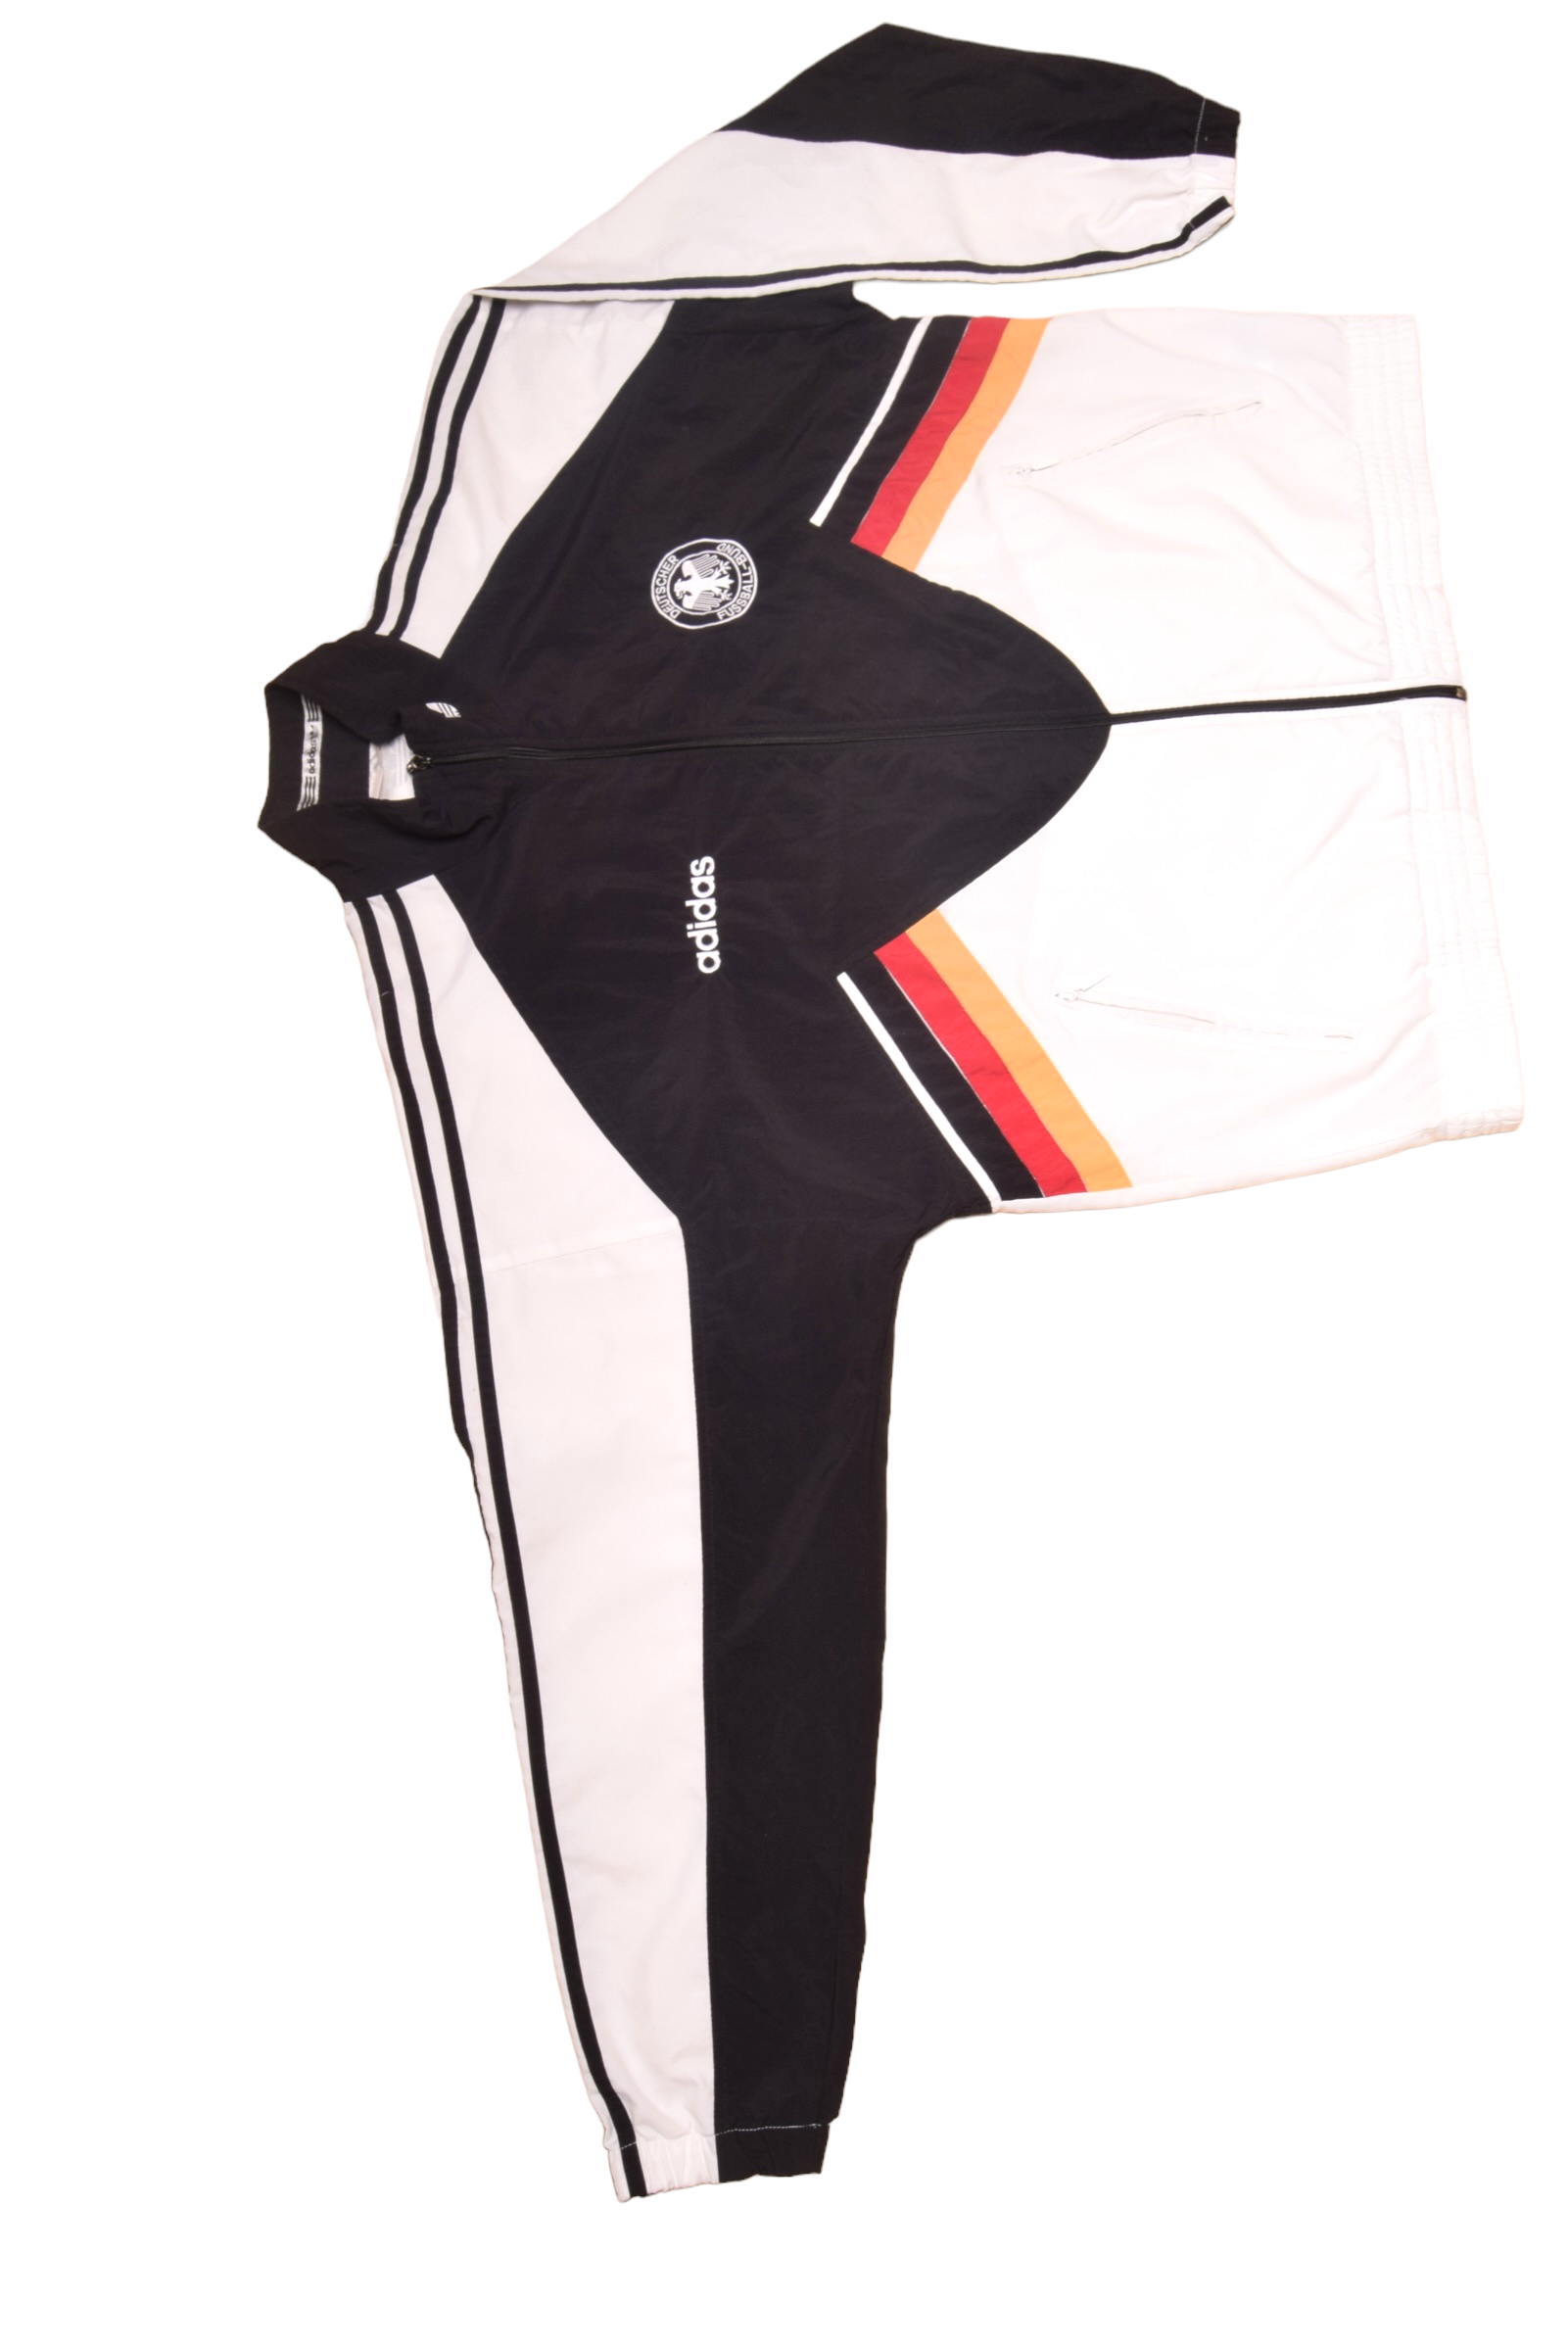 Vintage Germany Adidas 1994 - 1995 - 1996 Jacket Size L Black White Red